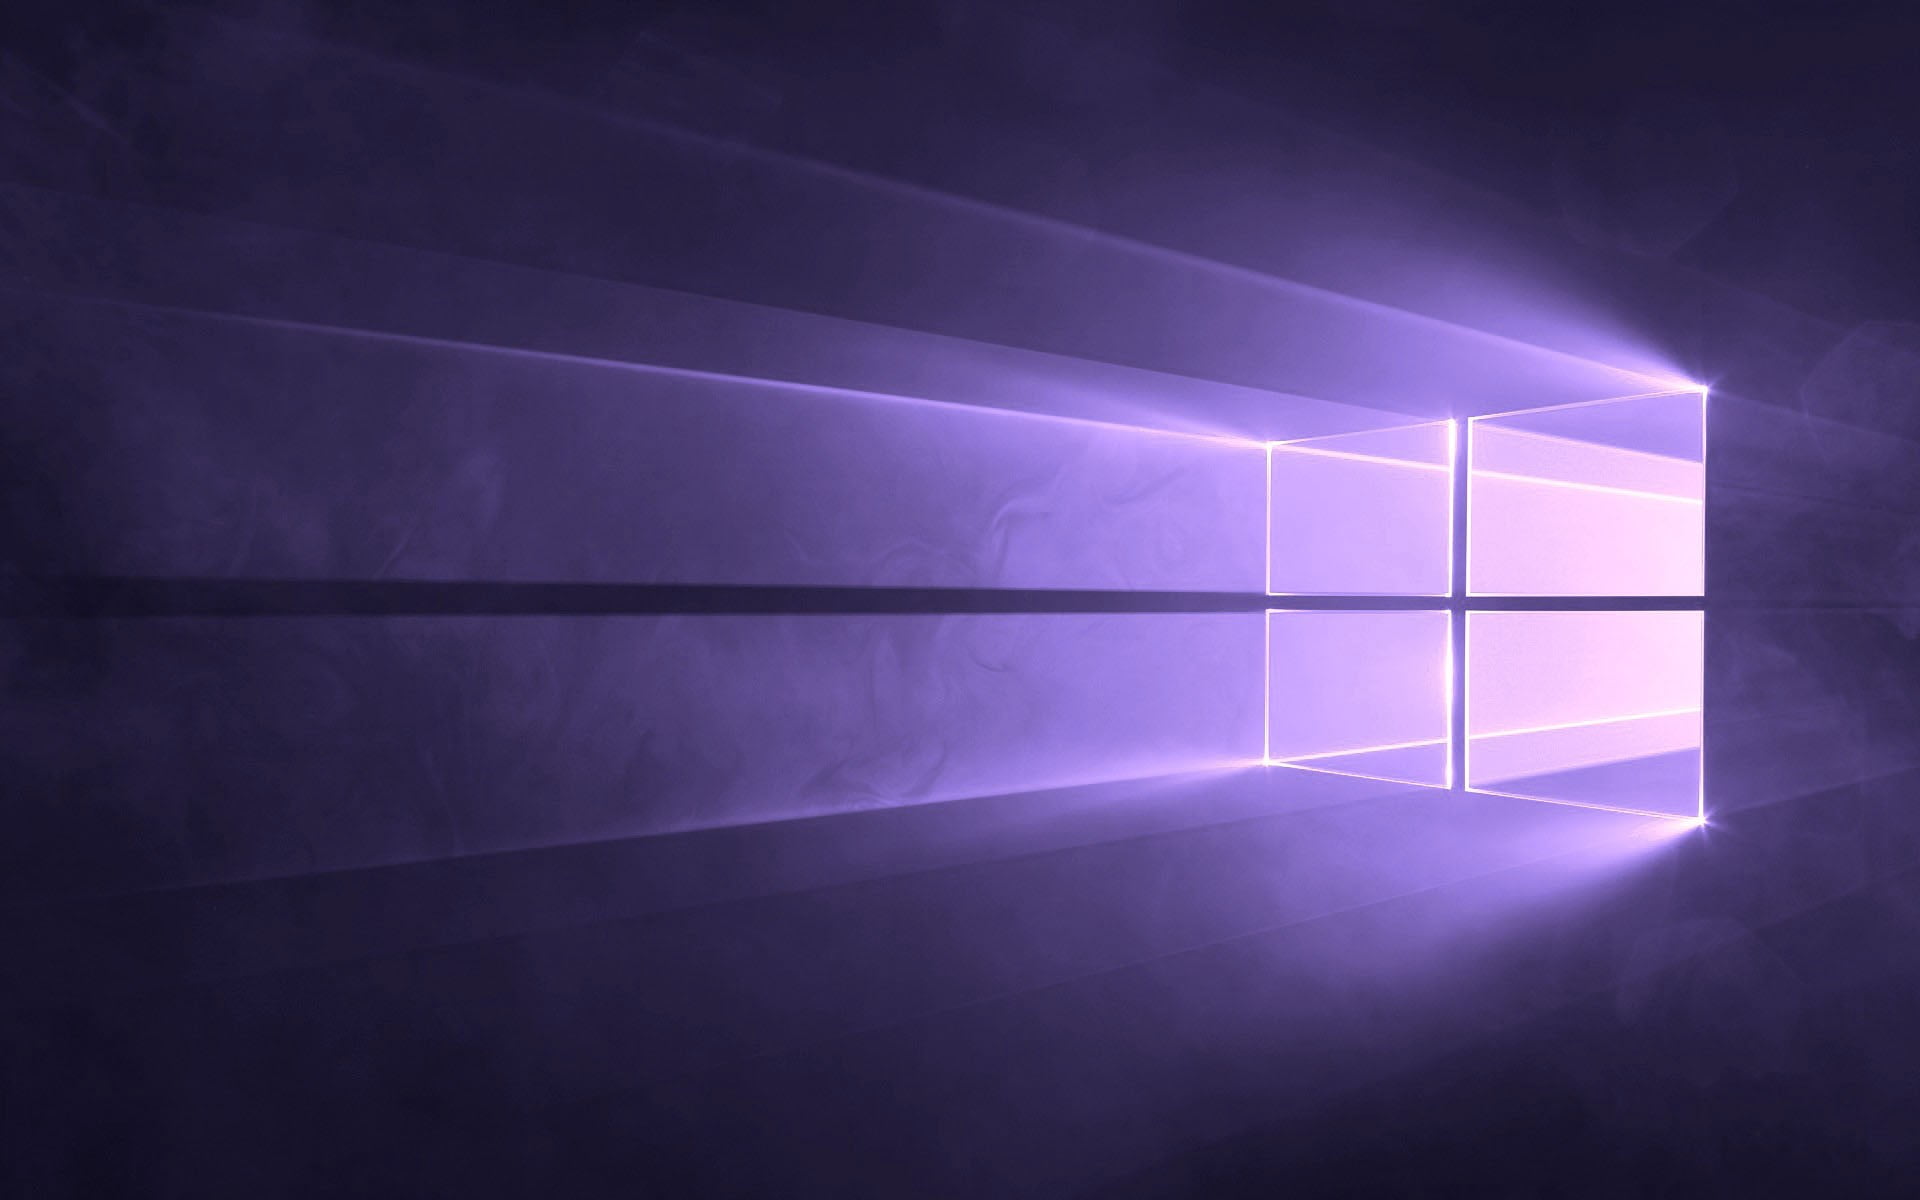 Windows 10, Microsoft Windows, operating system, logo, purple